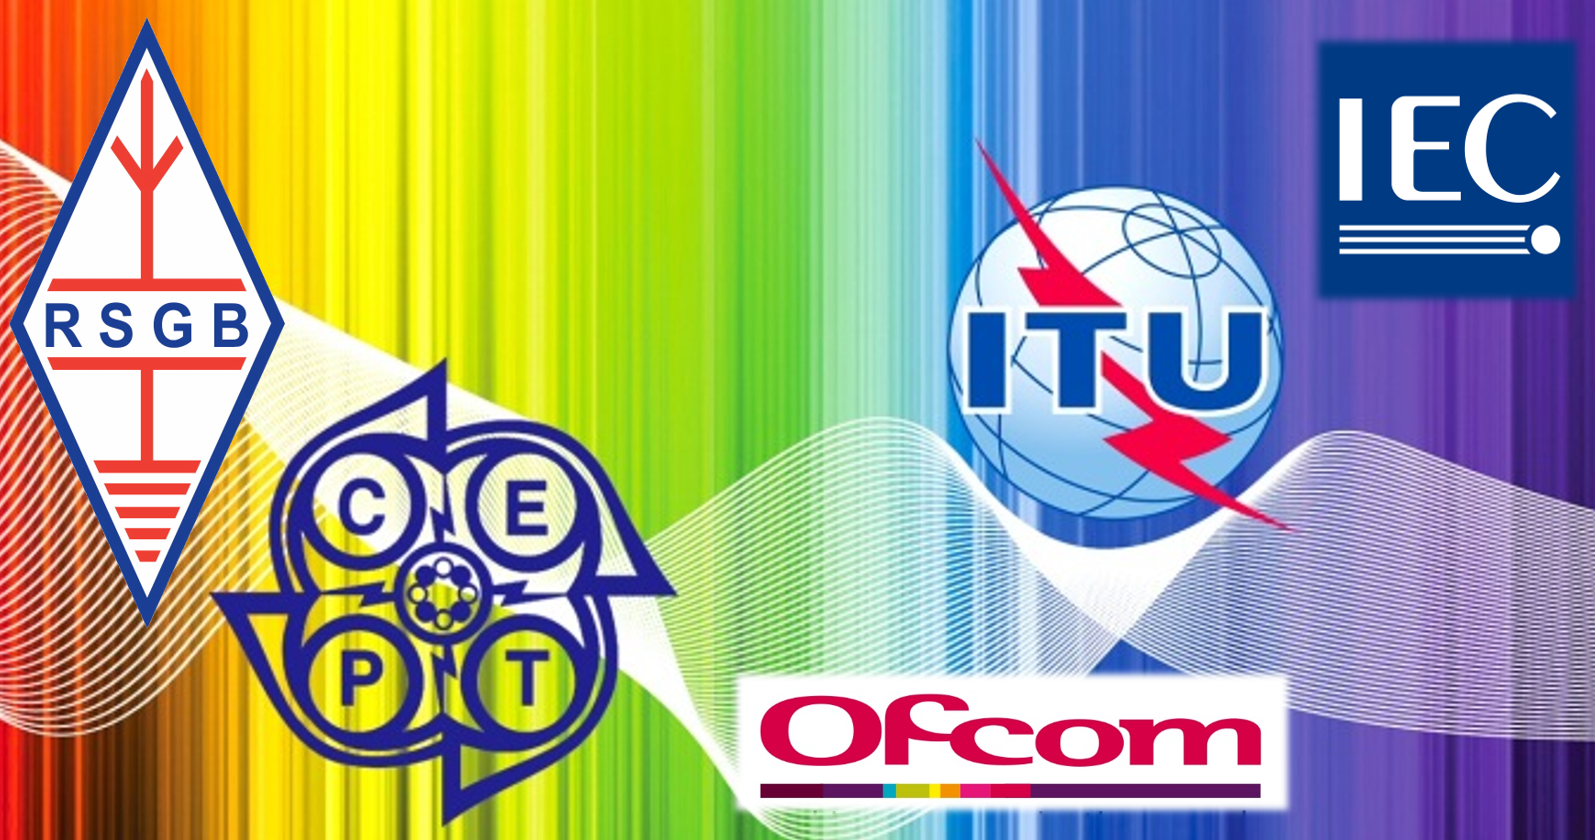 Spectrum-Logos